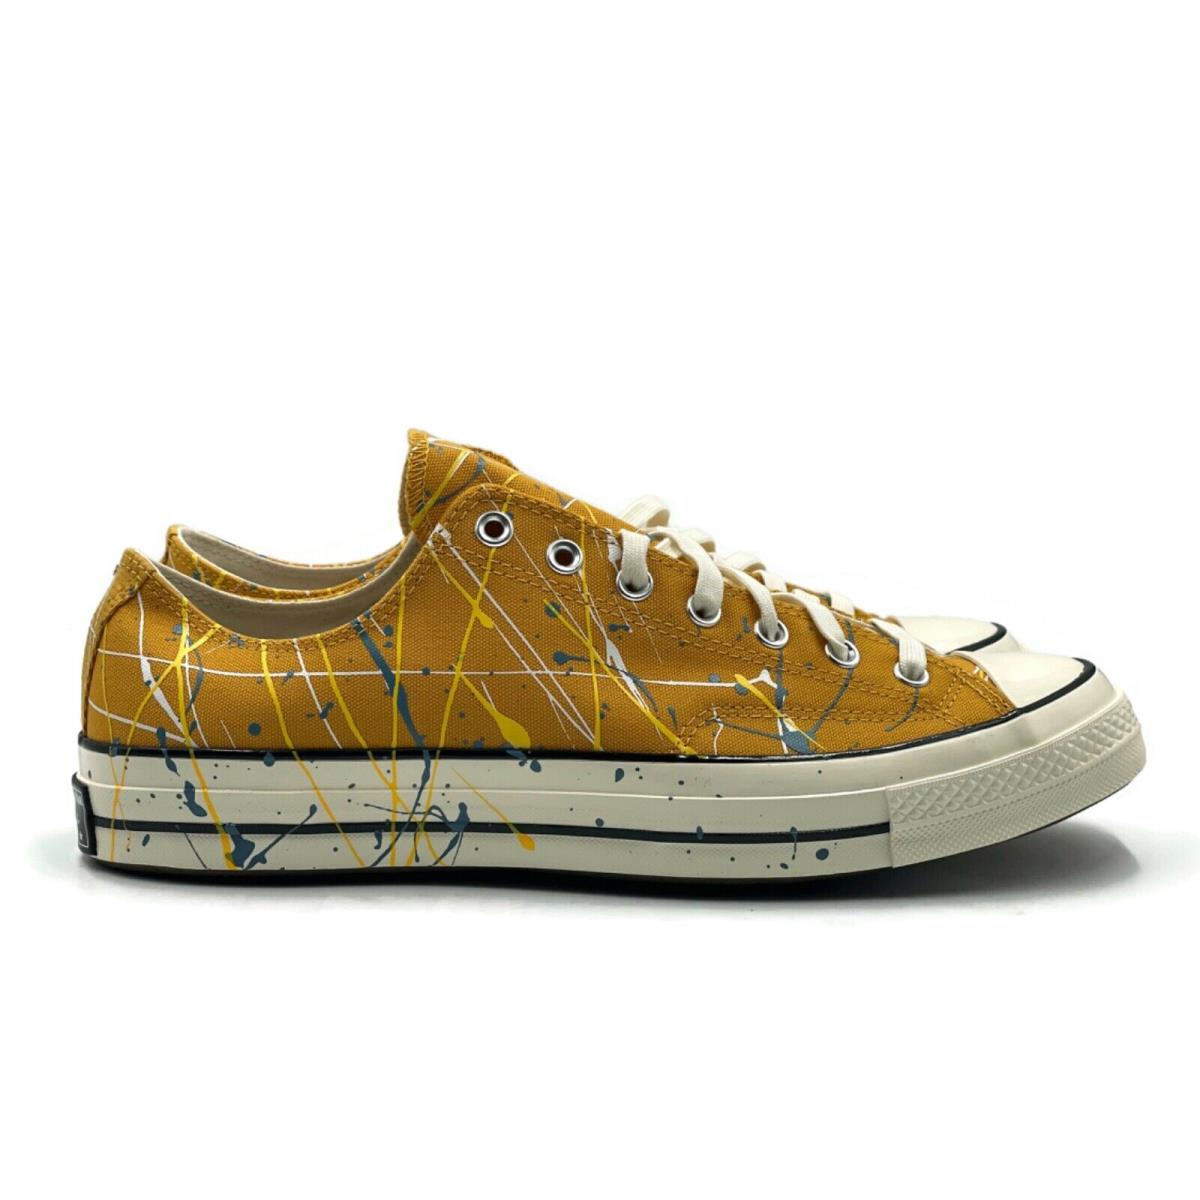 Converse Chuck 70 OX Paint Splatter Mens Skate Shoe Gold White Trainer Sneaker